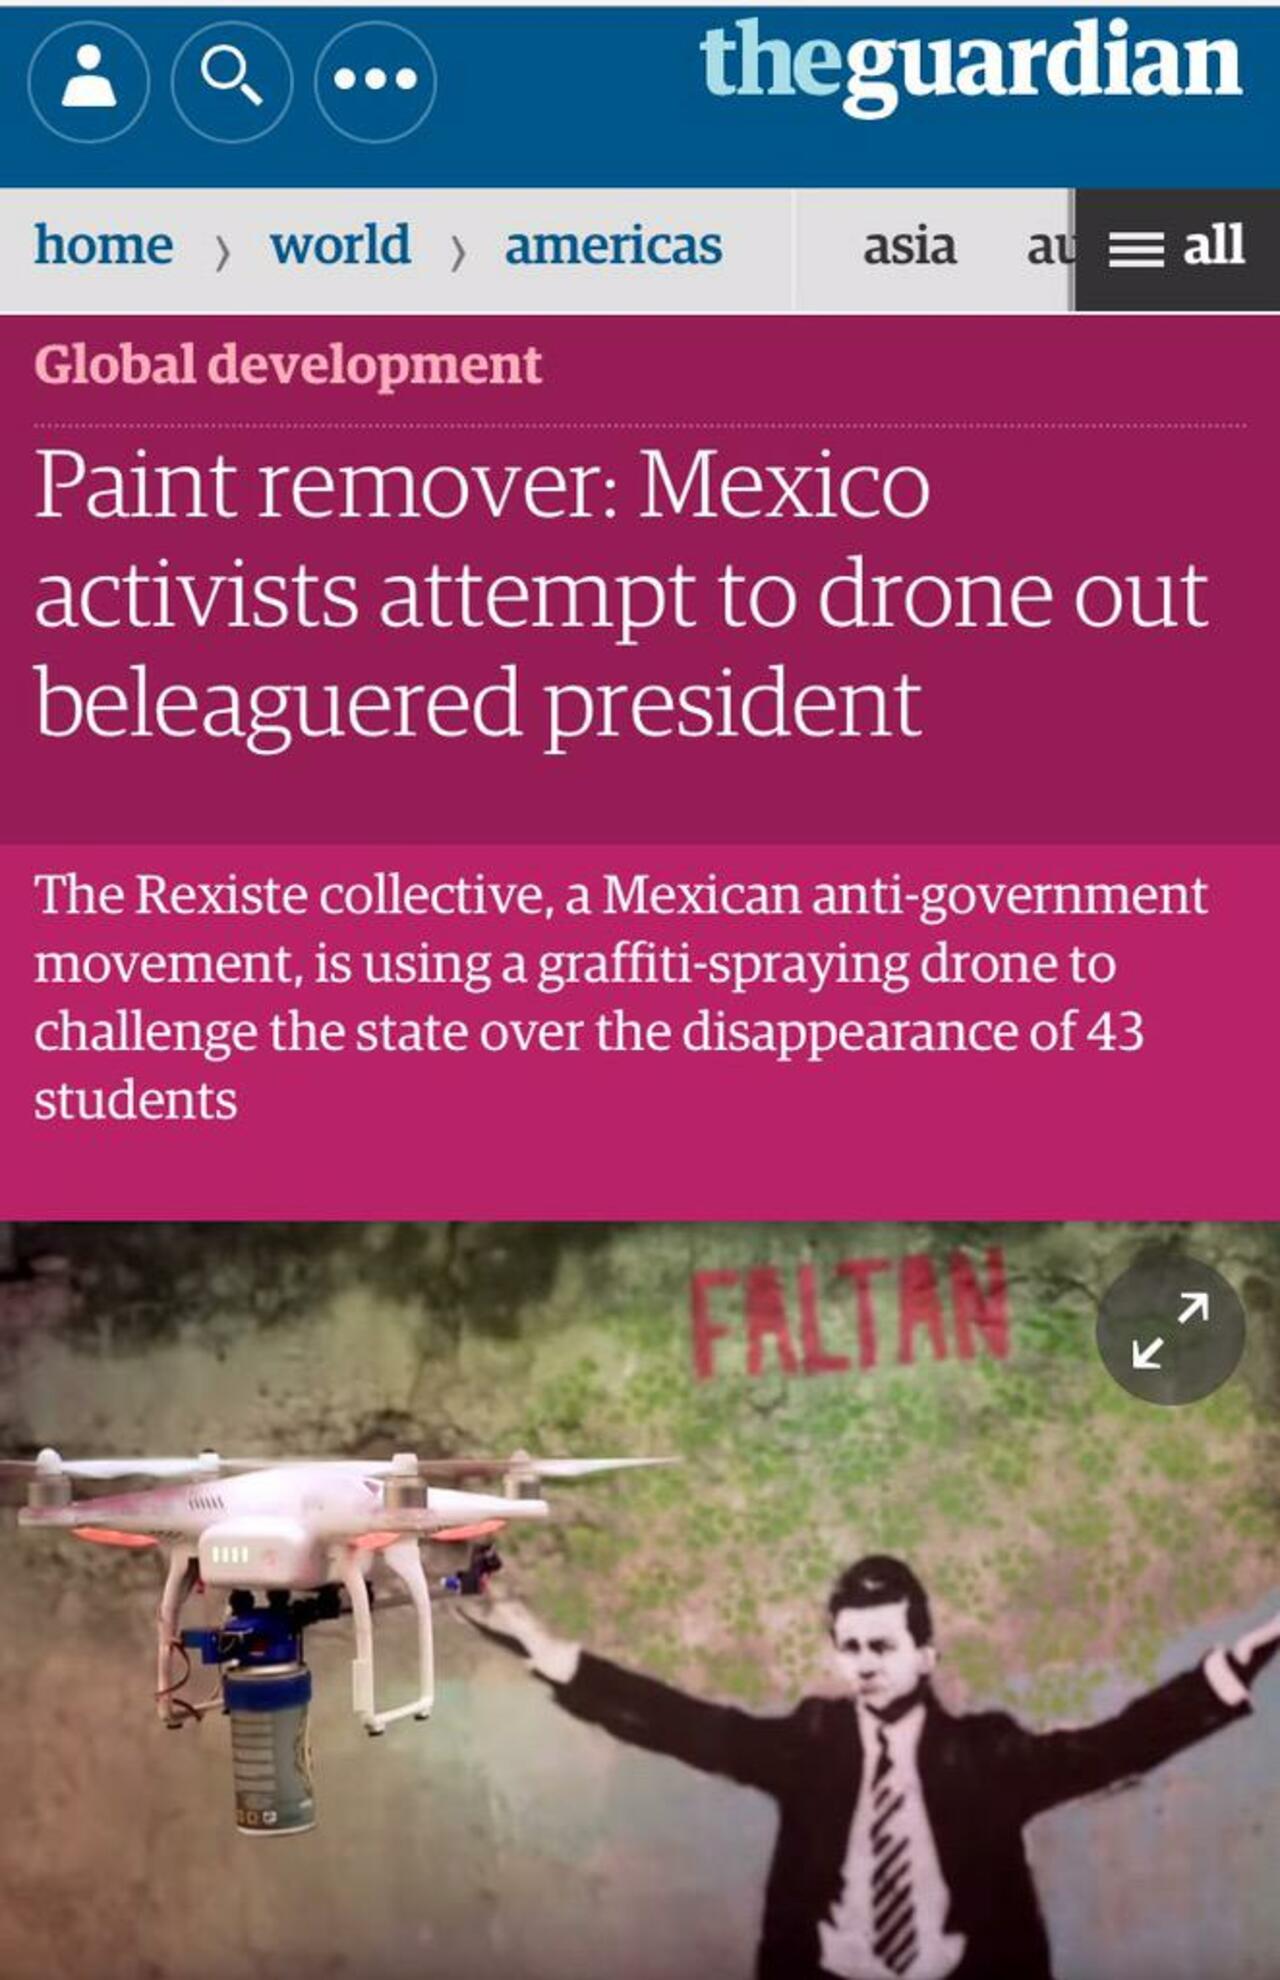 RT @rexiste: #Droncita "mex graffiti-spraying drone challenge the state" @guardian  #StreetArt #Graffiti http://www.theguardian.com/global-development/2015/oct/15/mexico-droncita-rexiste-collective-president-enrique-pena-nieto http://t.co/90oOhy8xyu